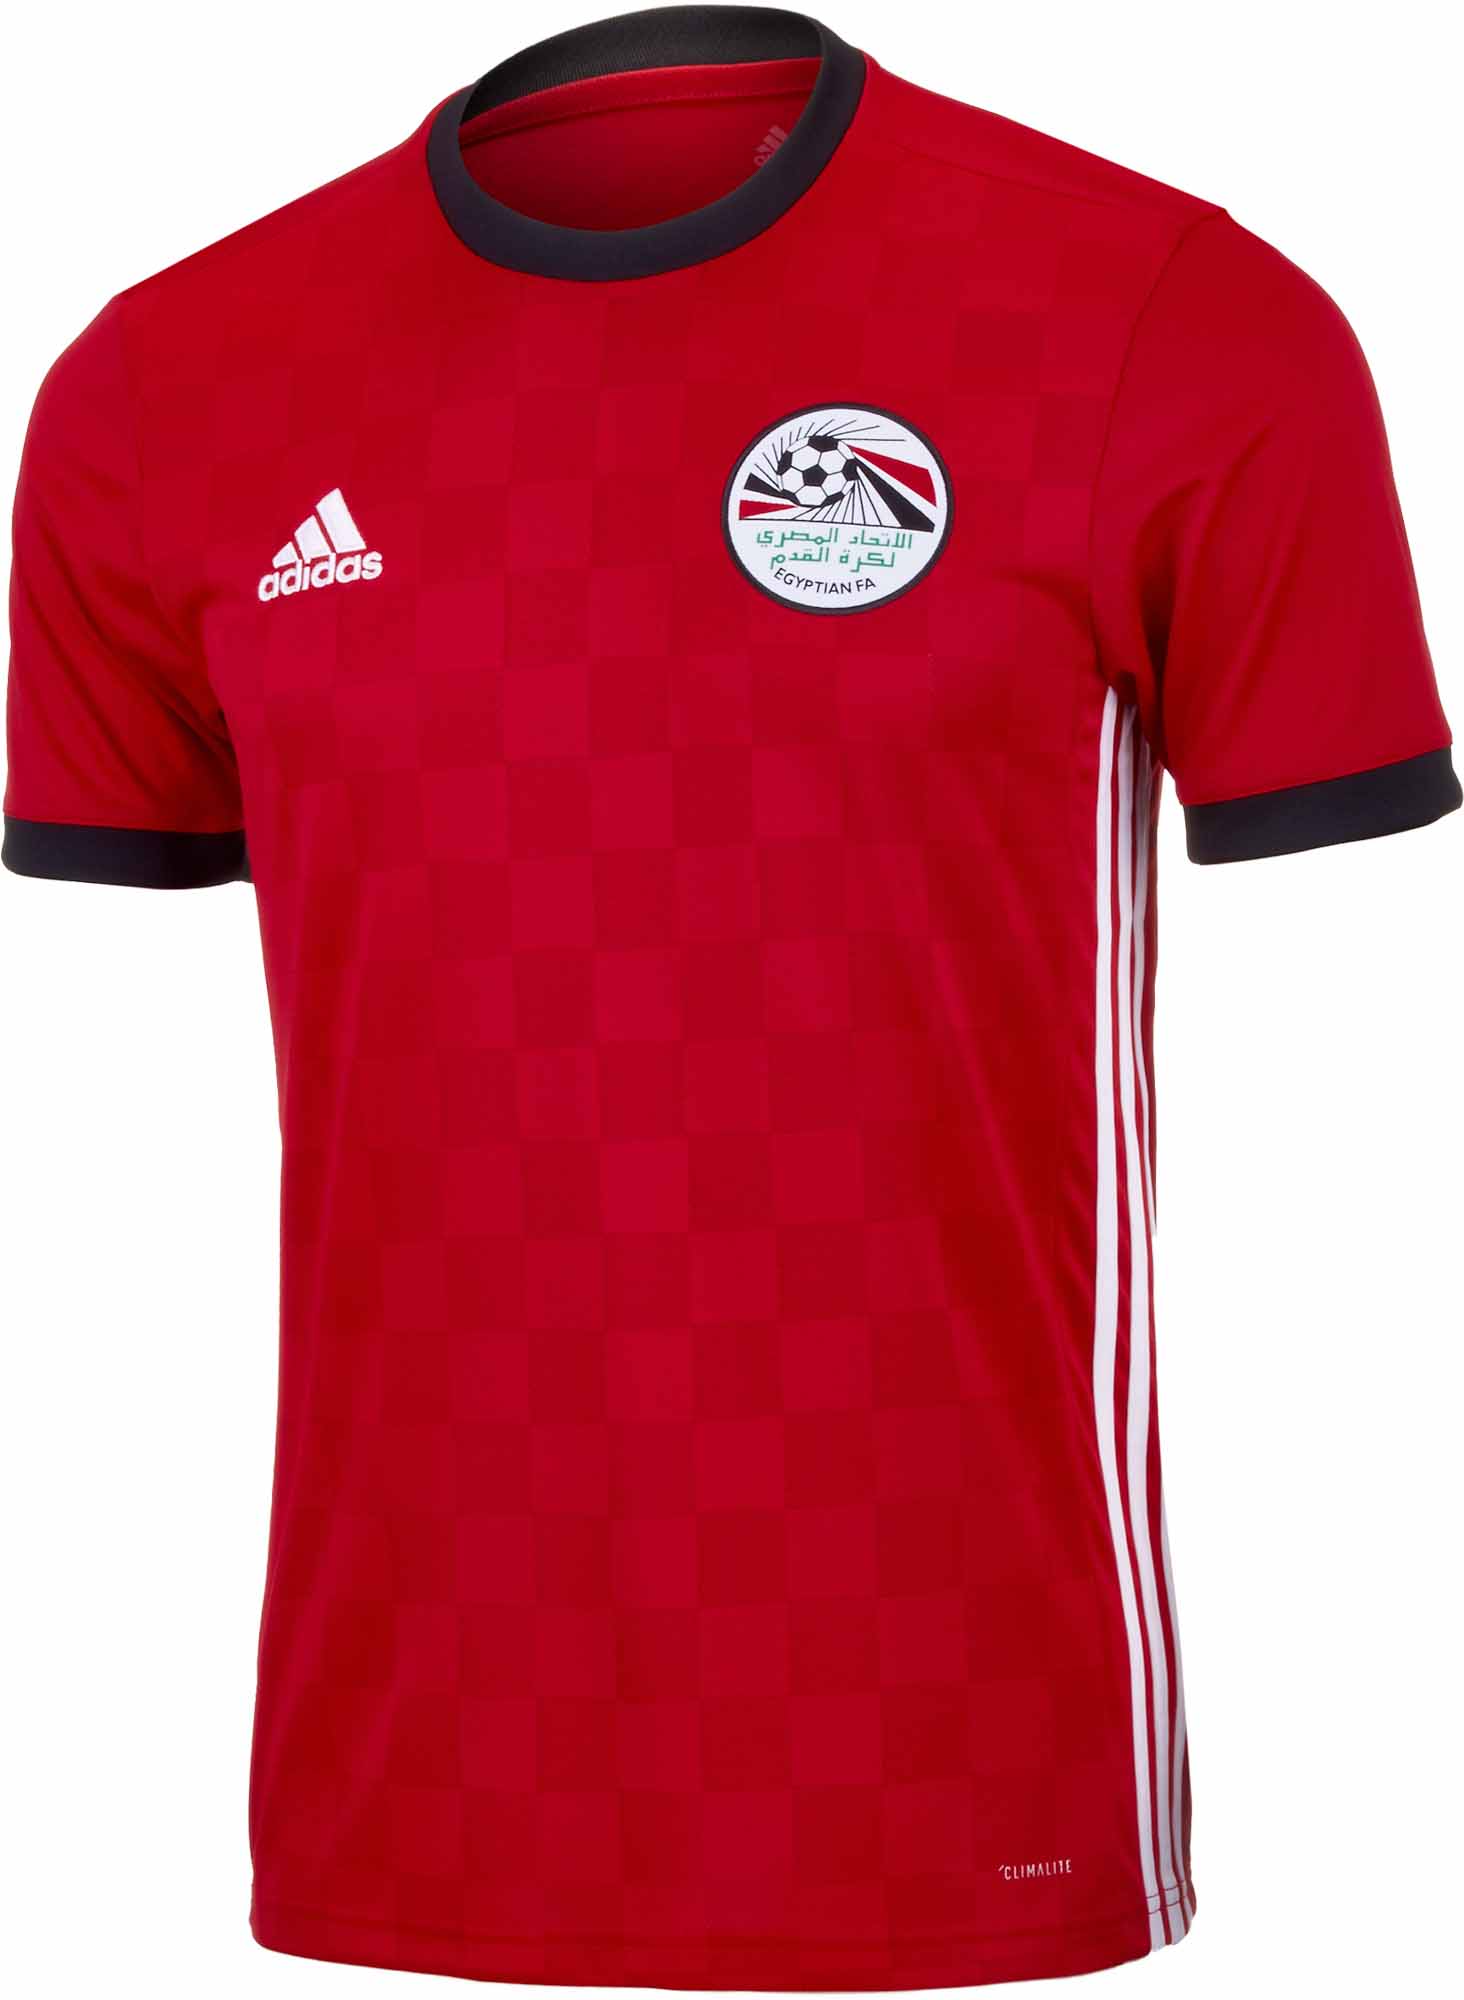 adidas world cup kits egypt